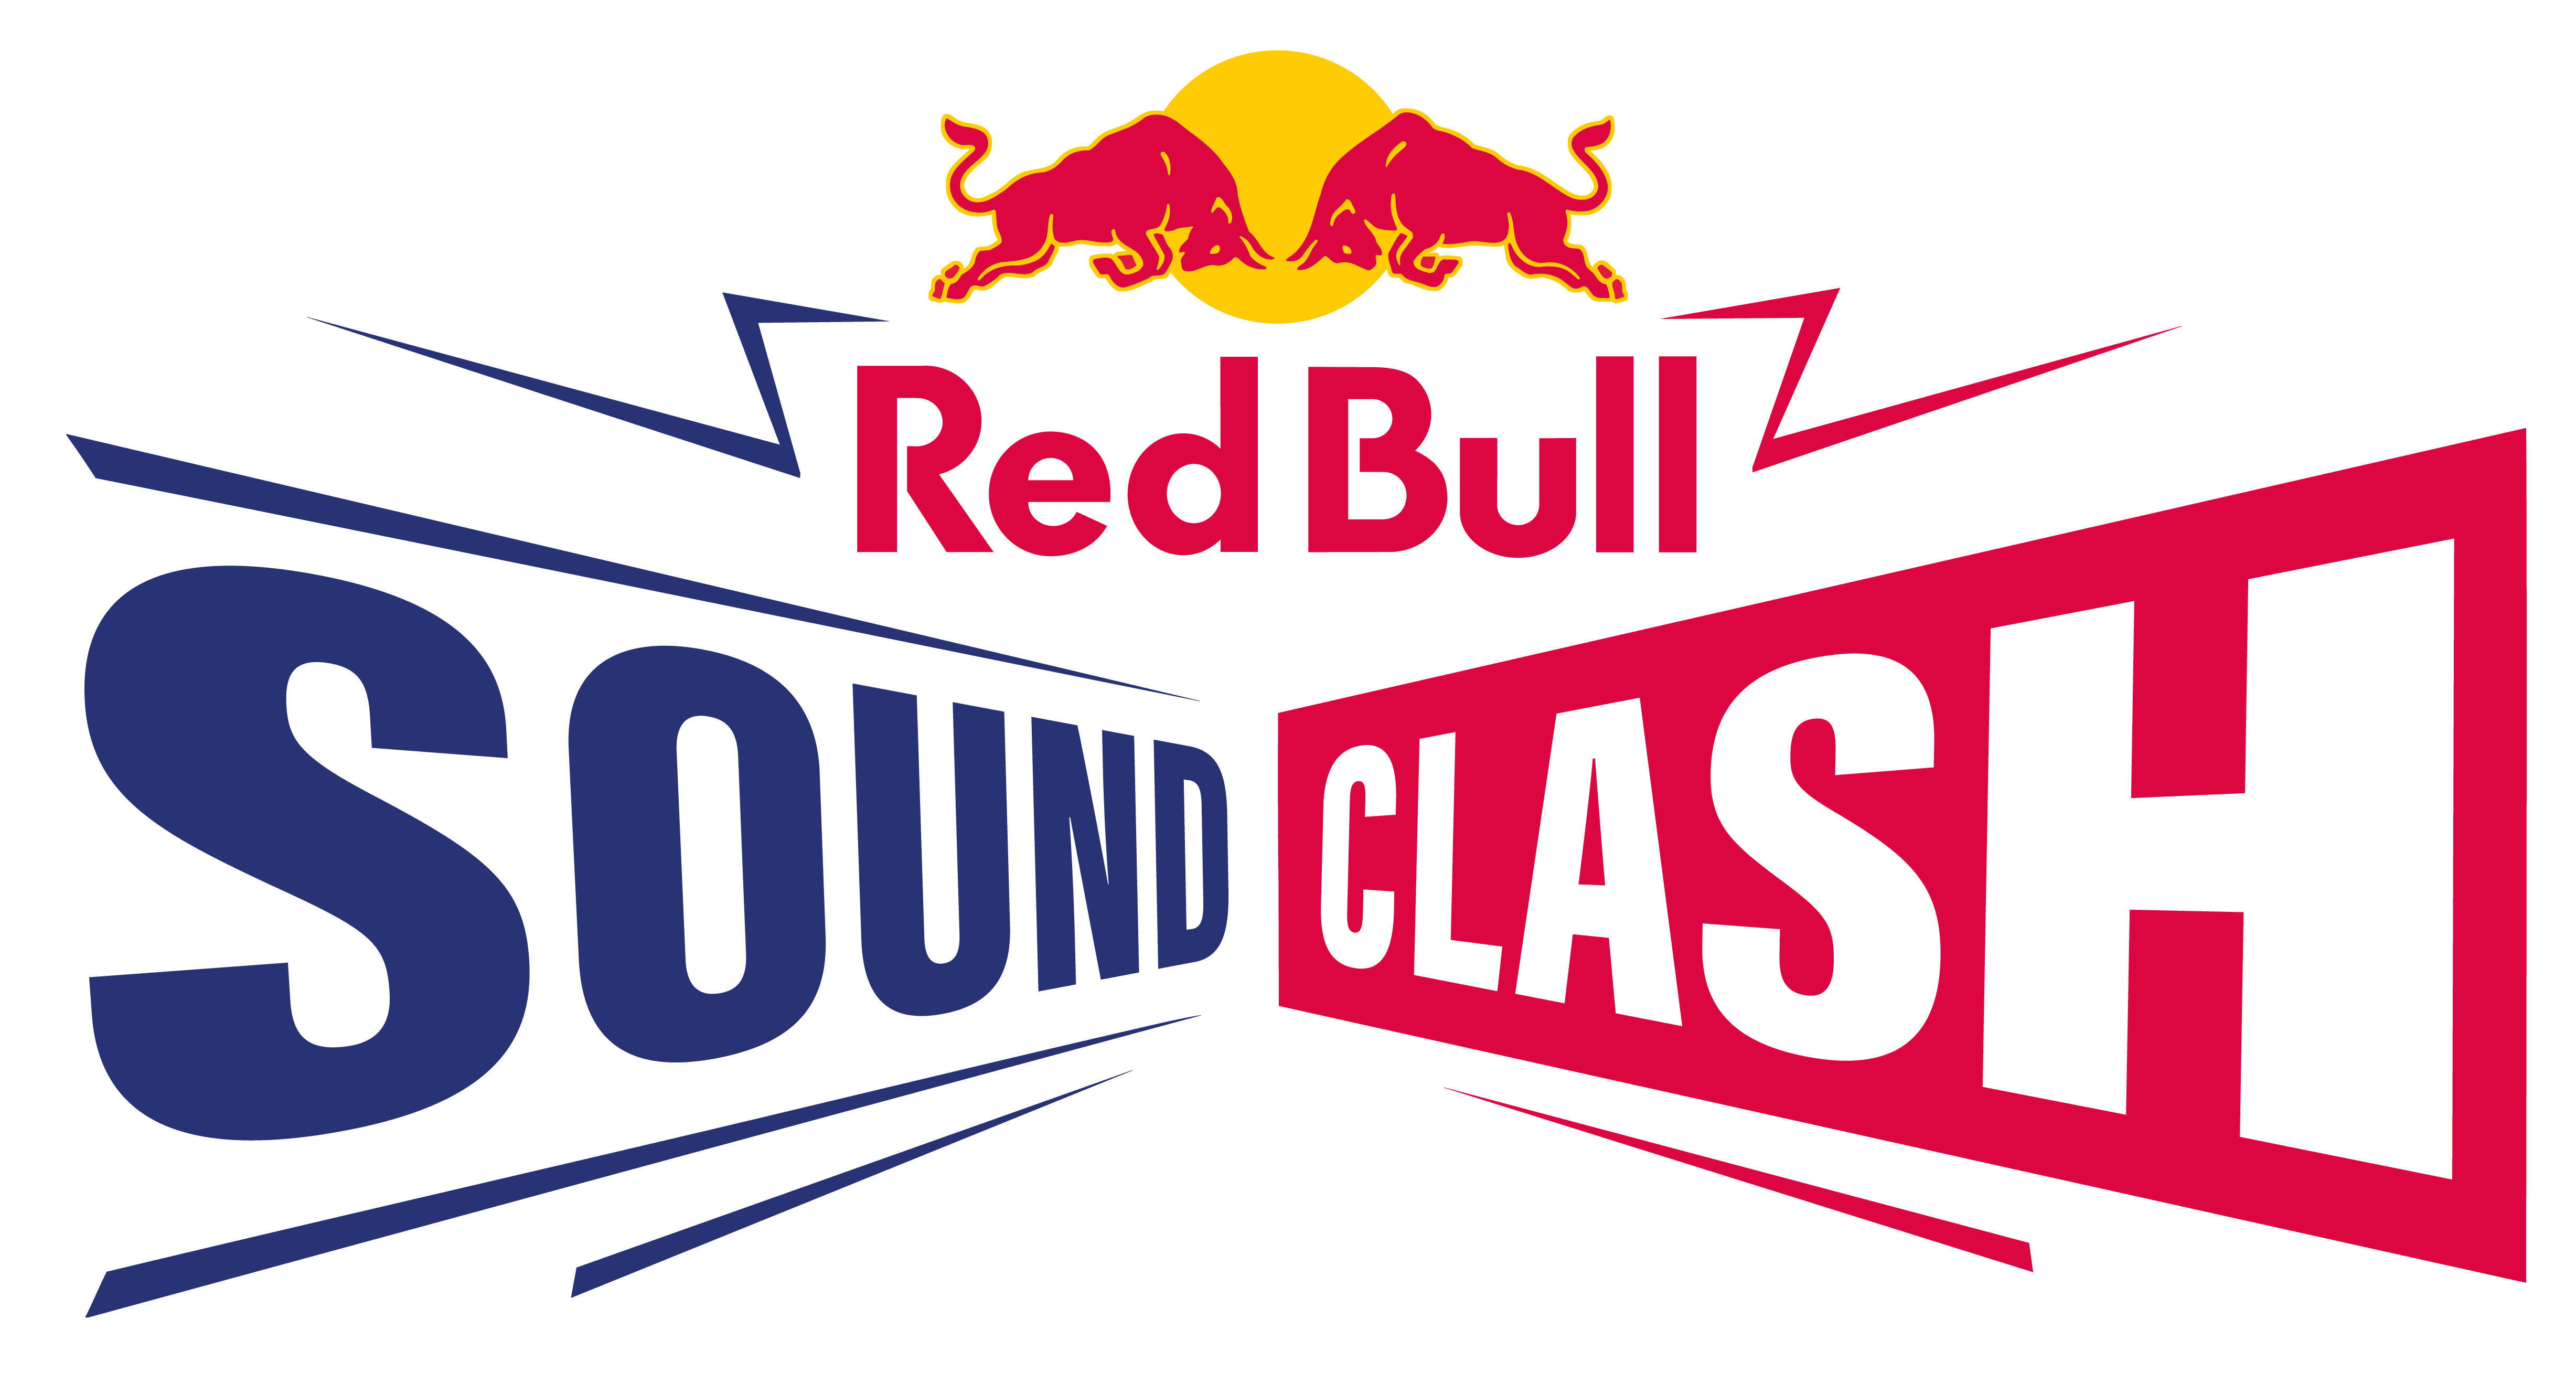 Red Bull SoundClash